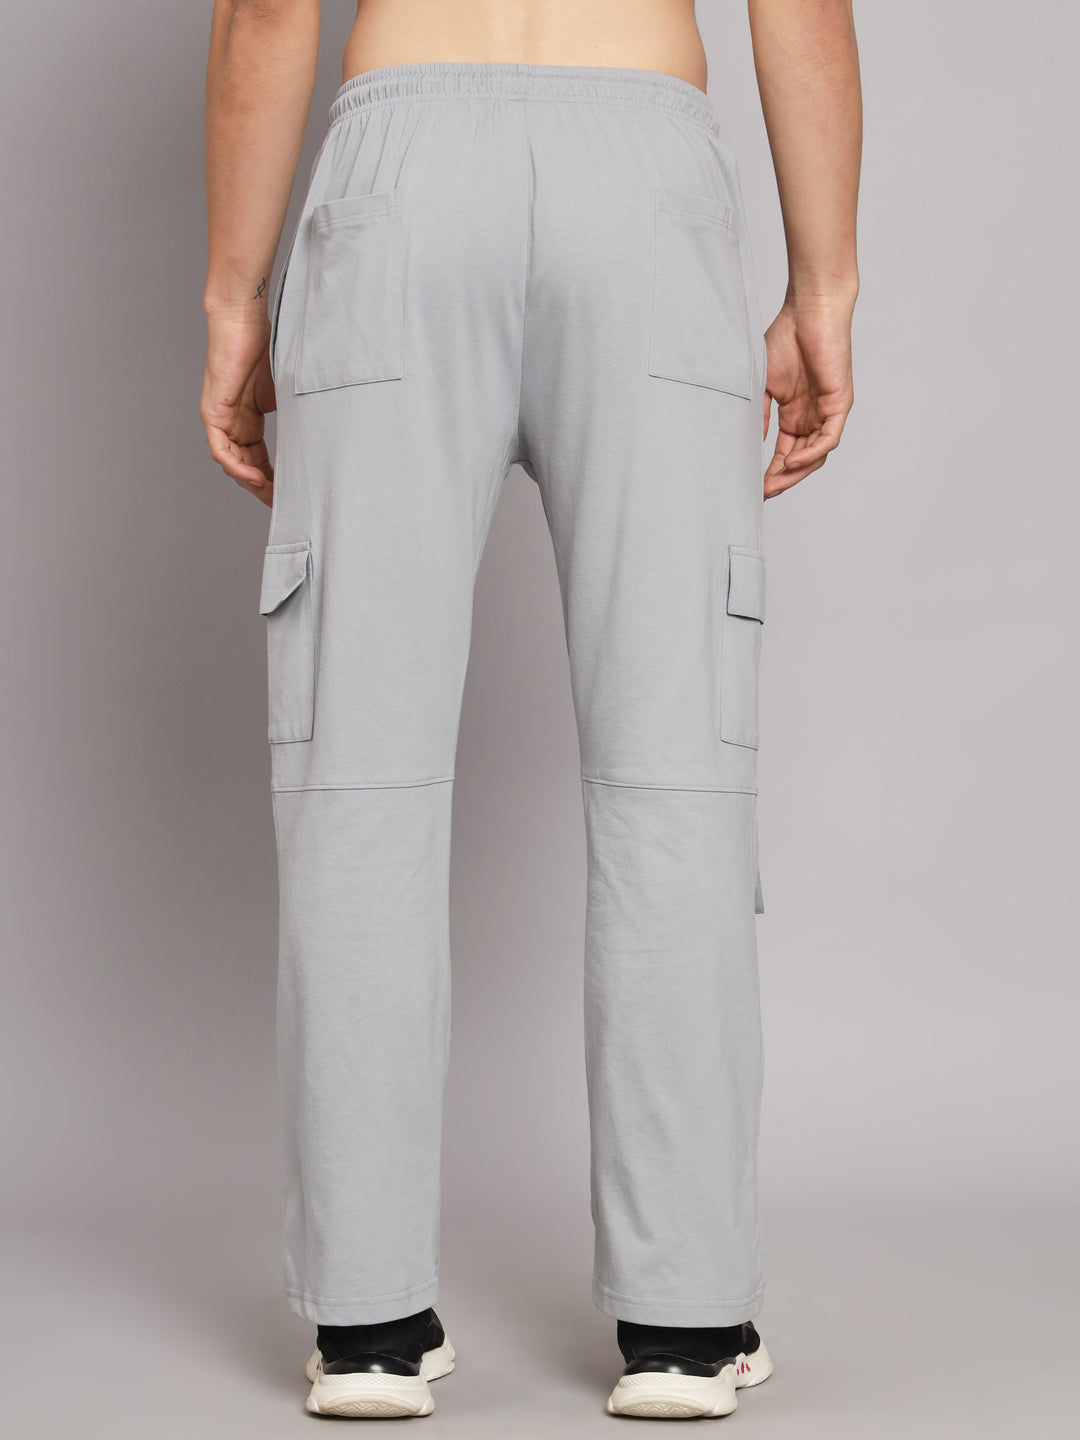 GRIFFEL Men Cotton 6 Pocket Front Logo Steel Grey Teddy Printed Trackpants - griffel